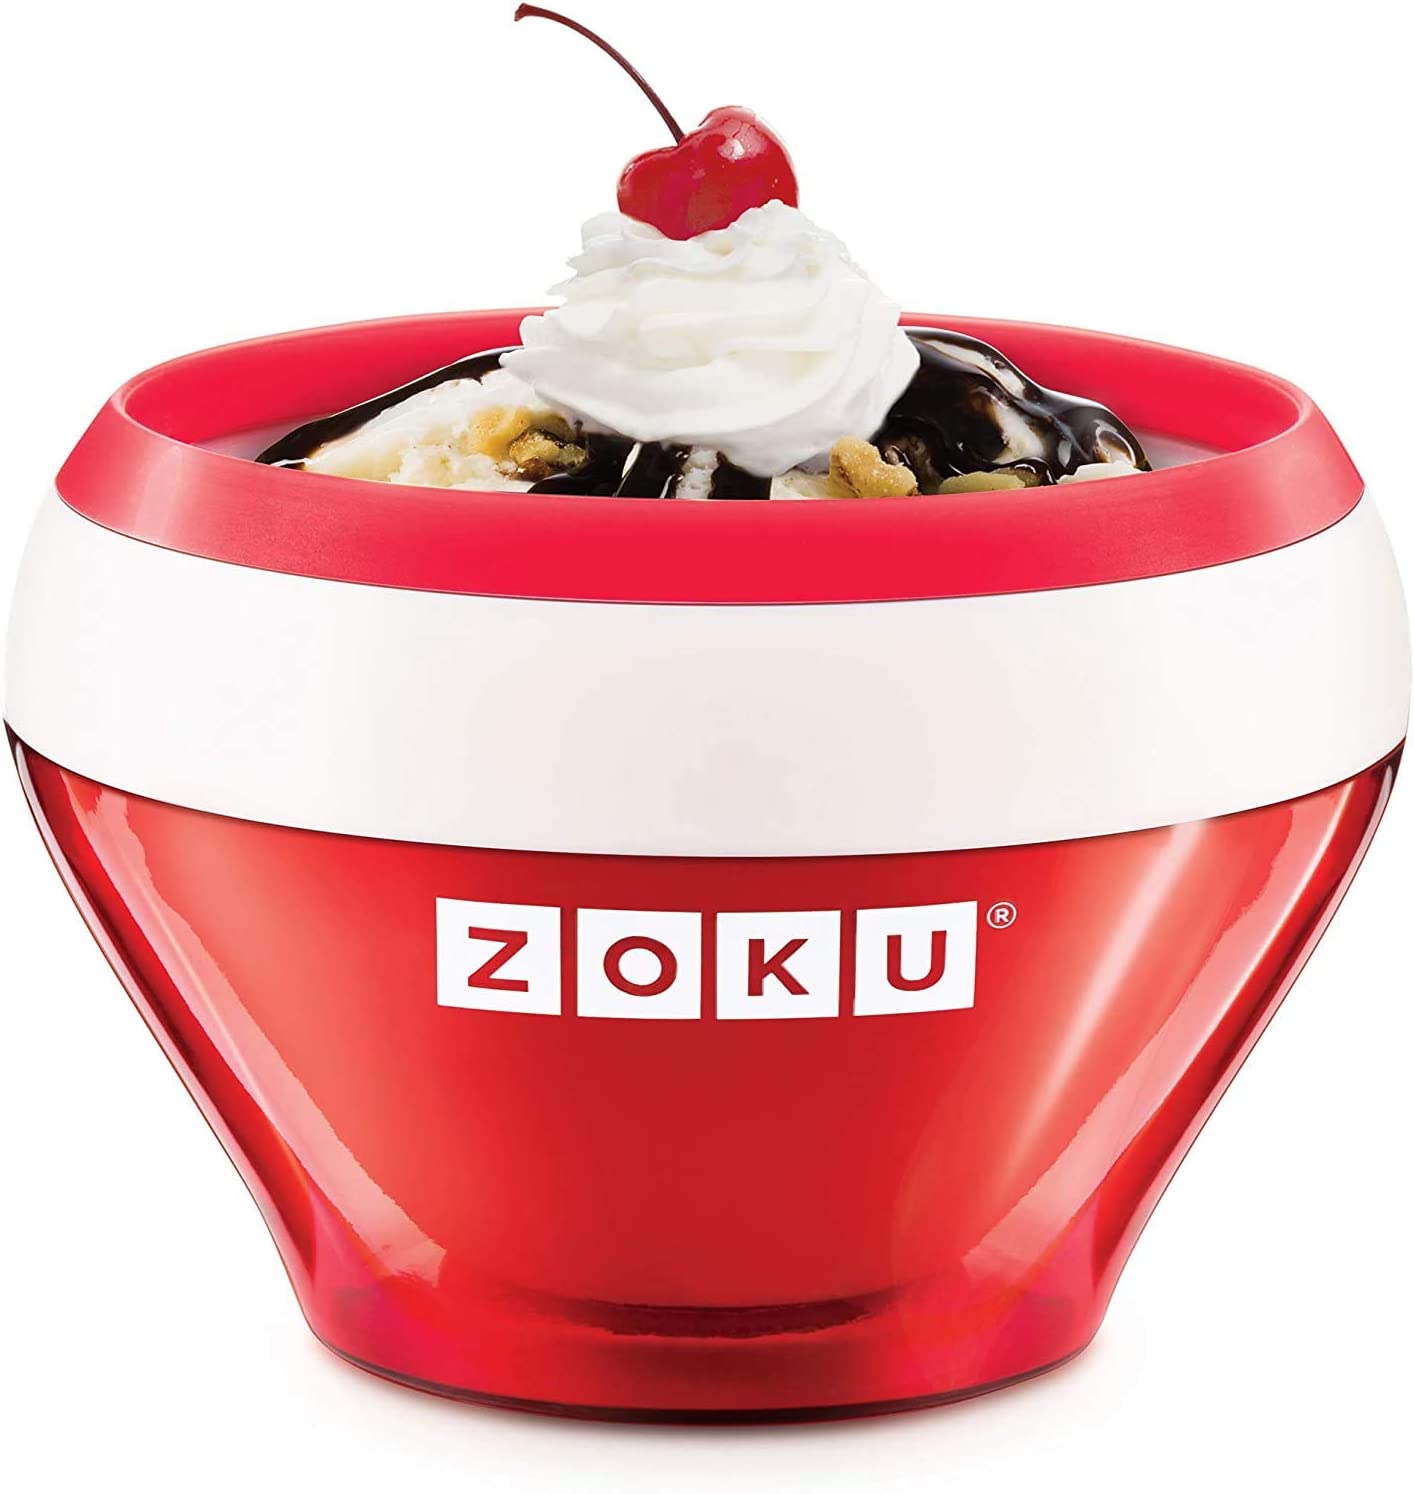 How To Use Zoku Ice Cream Maker